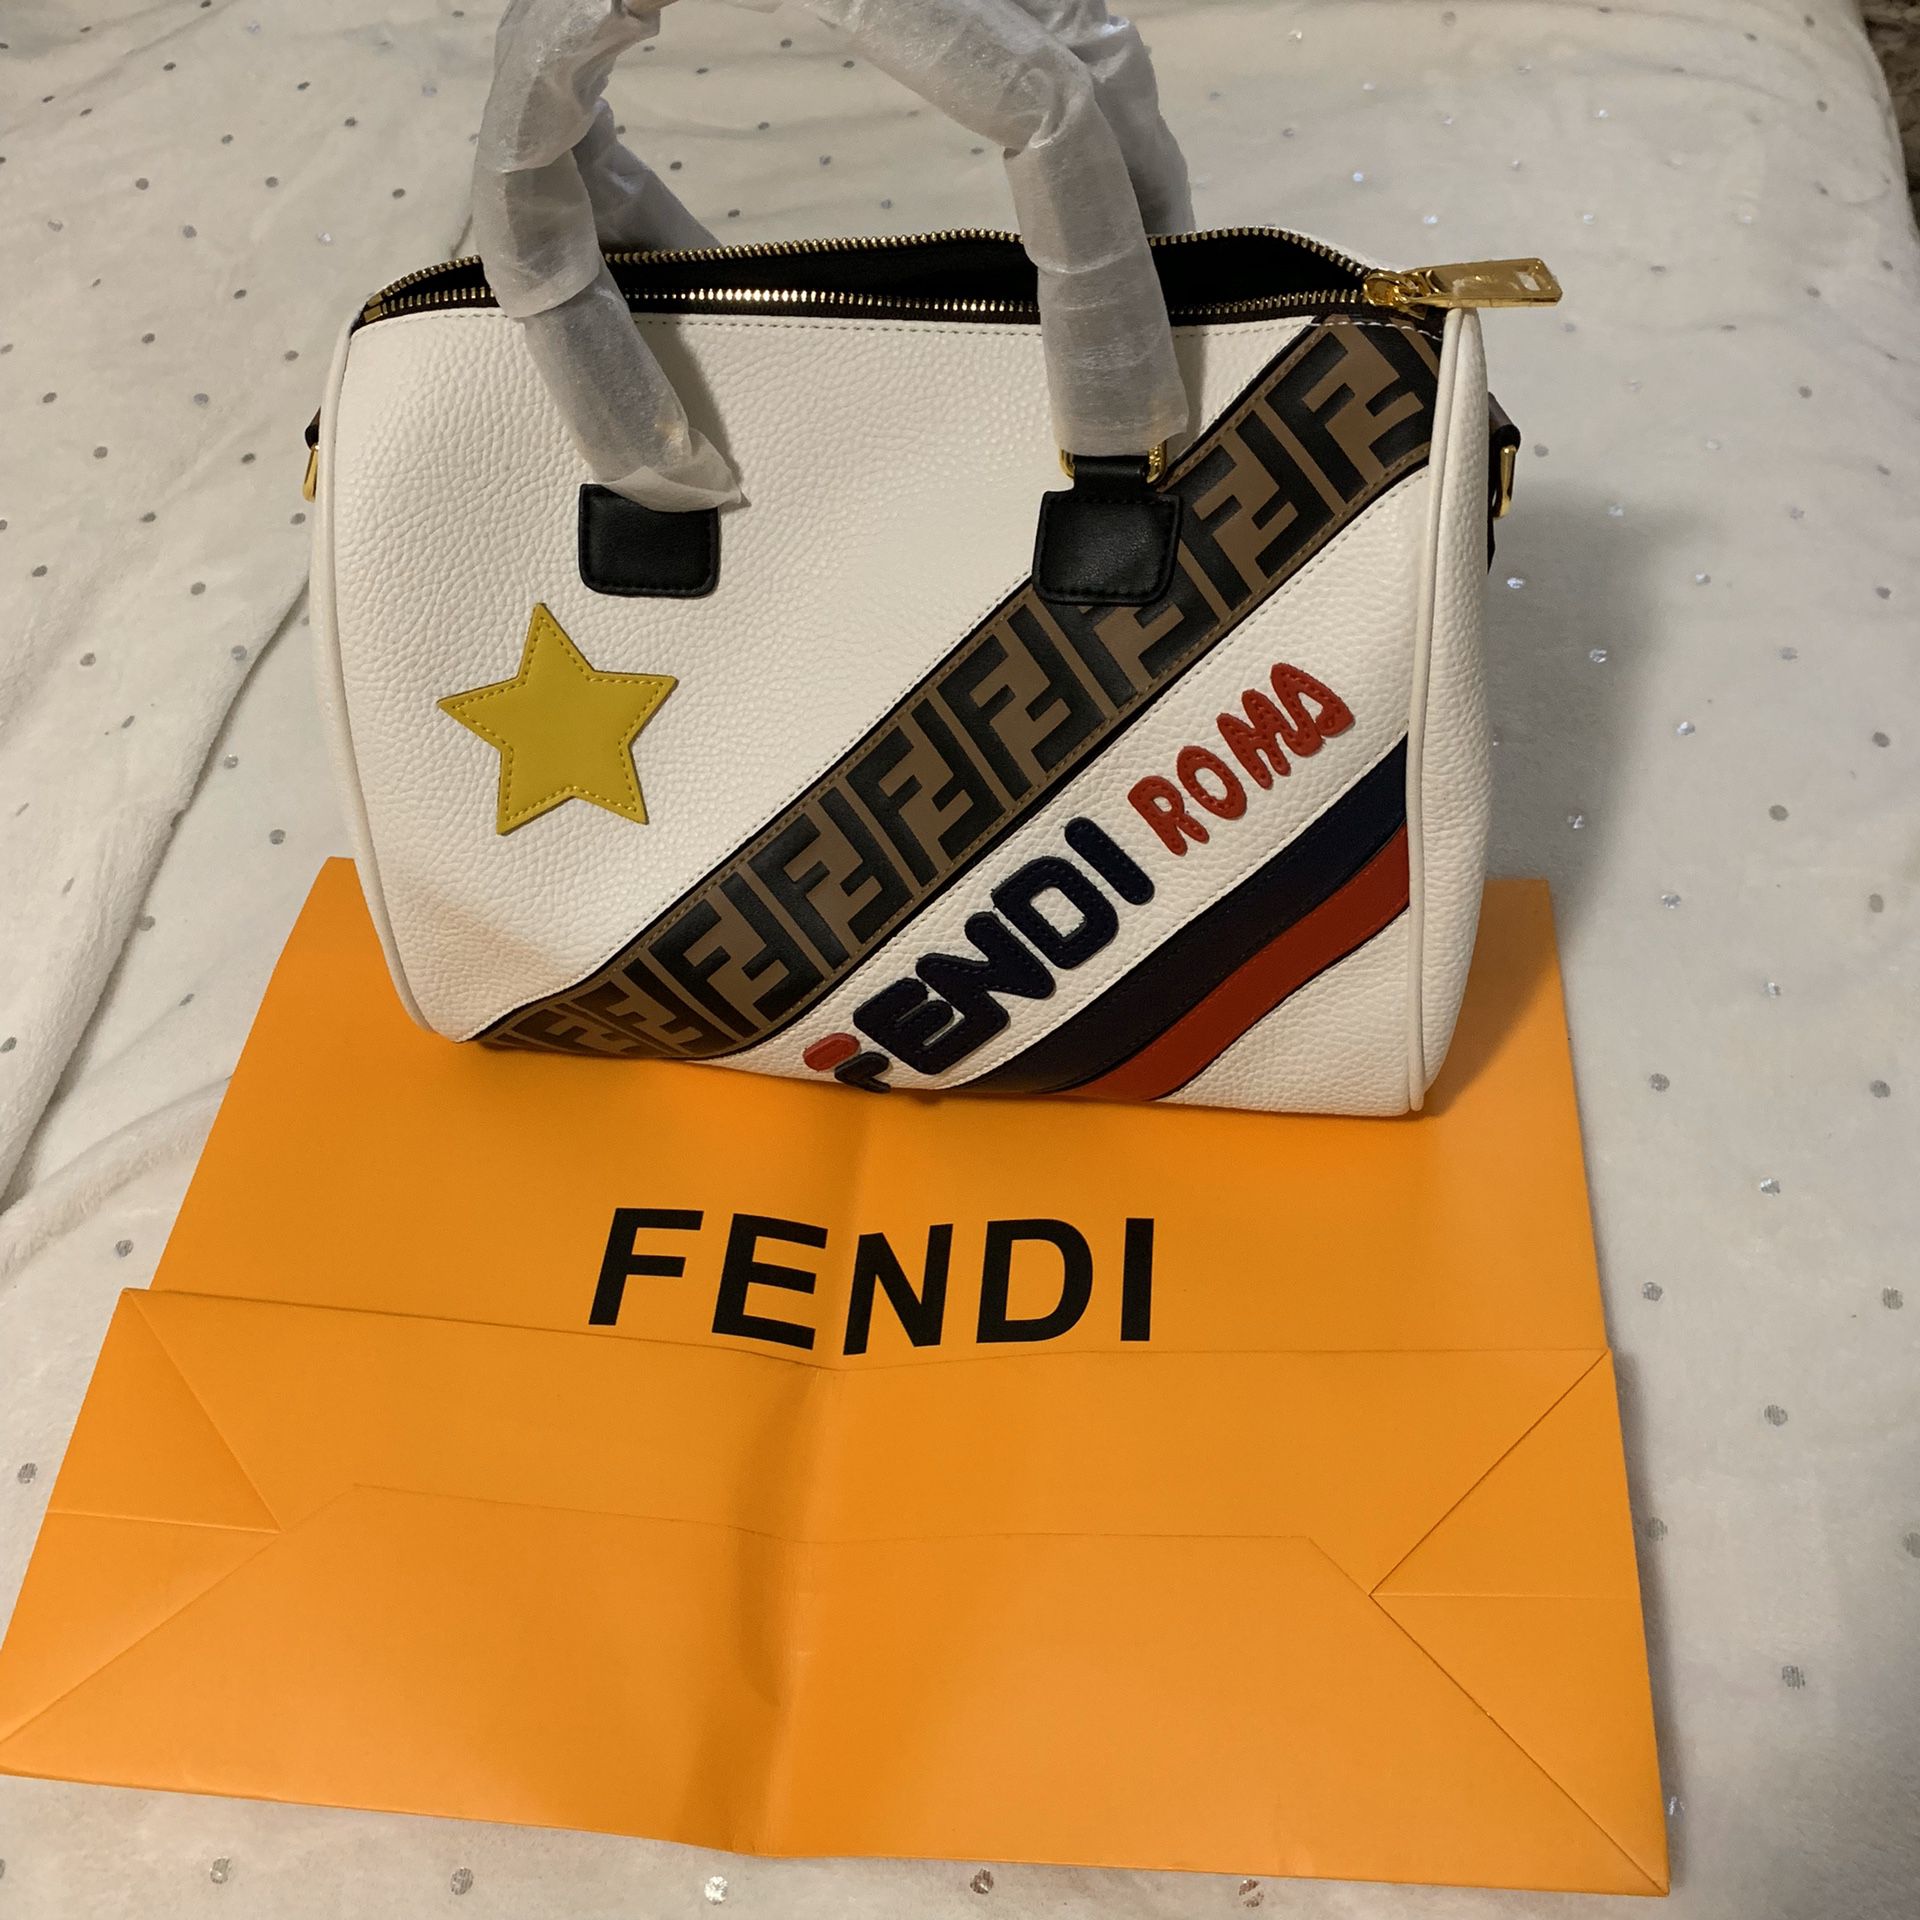 Brand new fendi bag never wore before